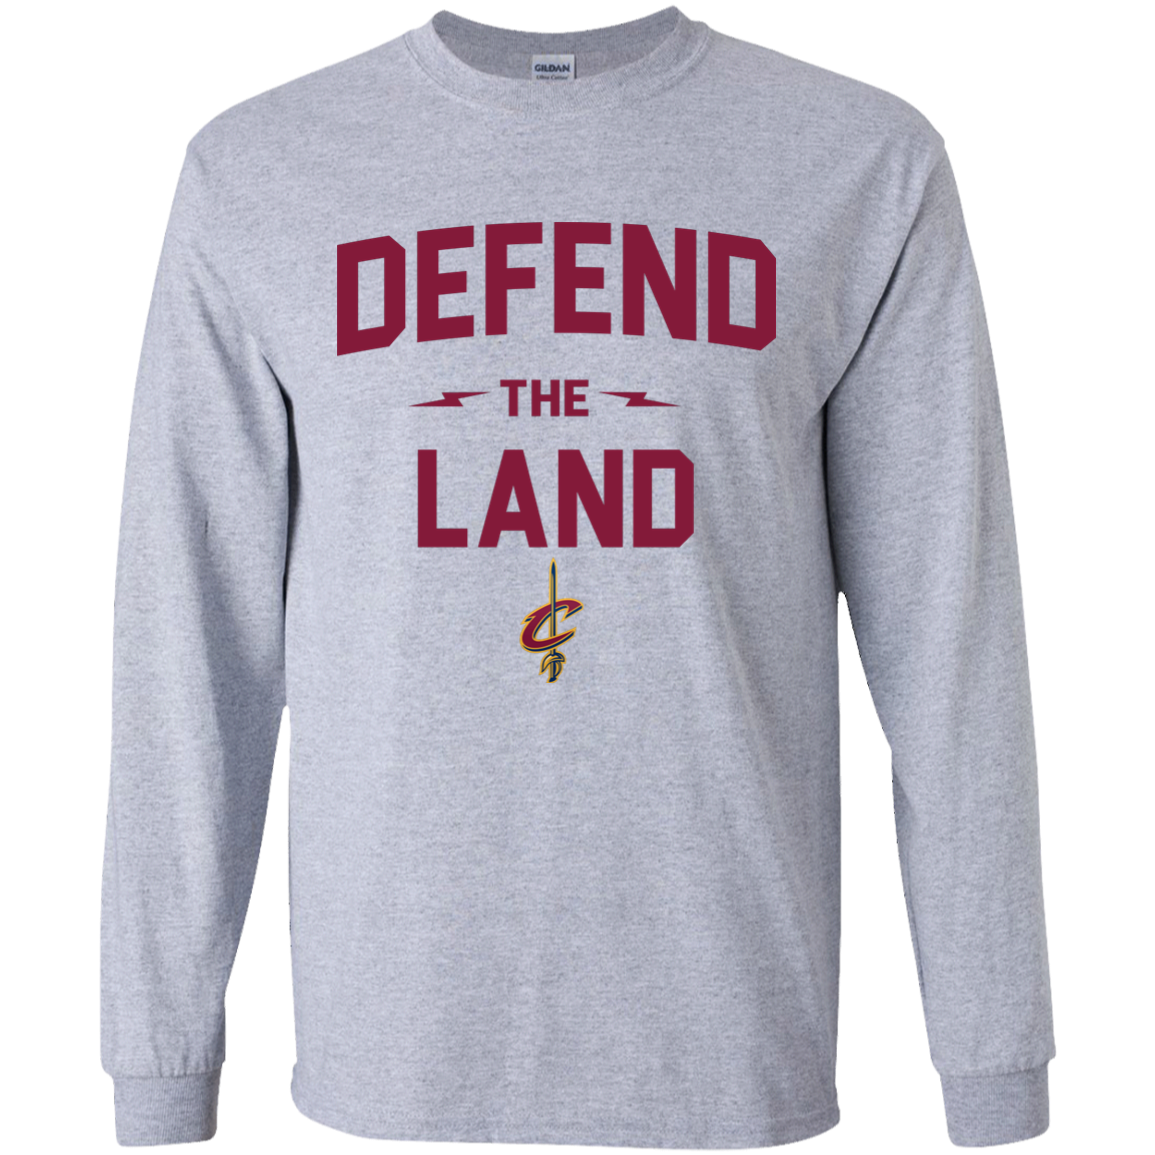 Defend The Land shirt, sweater, tank